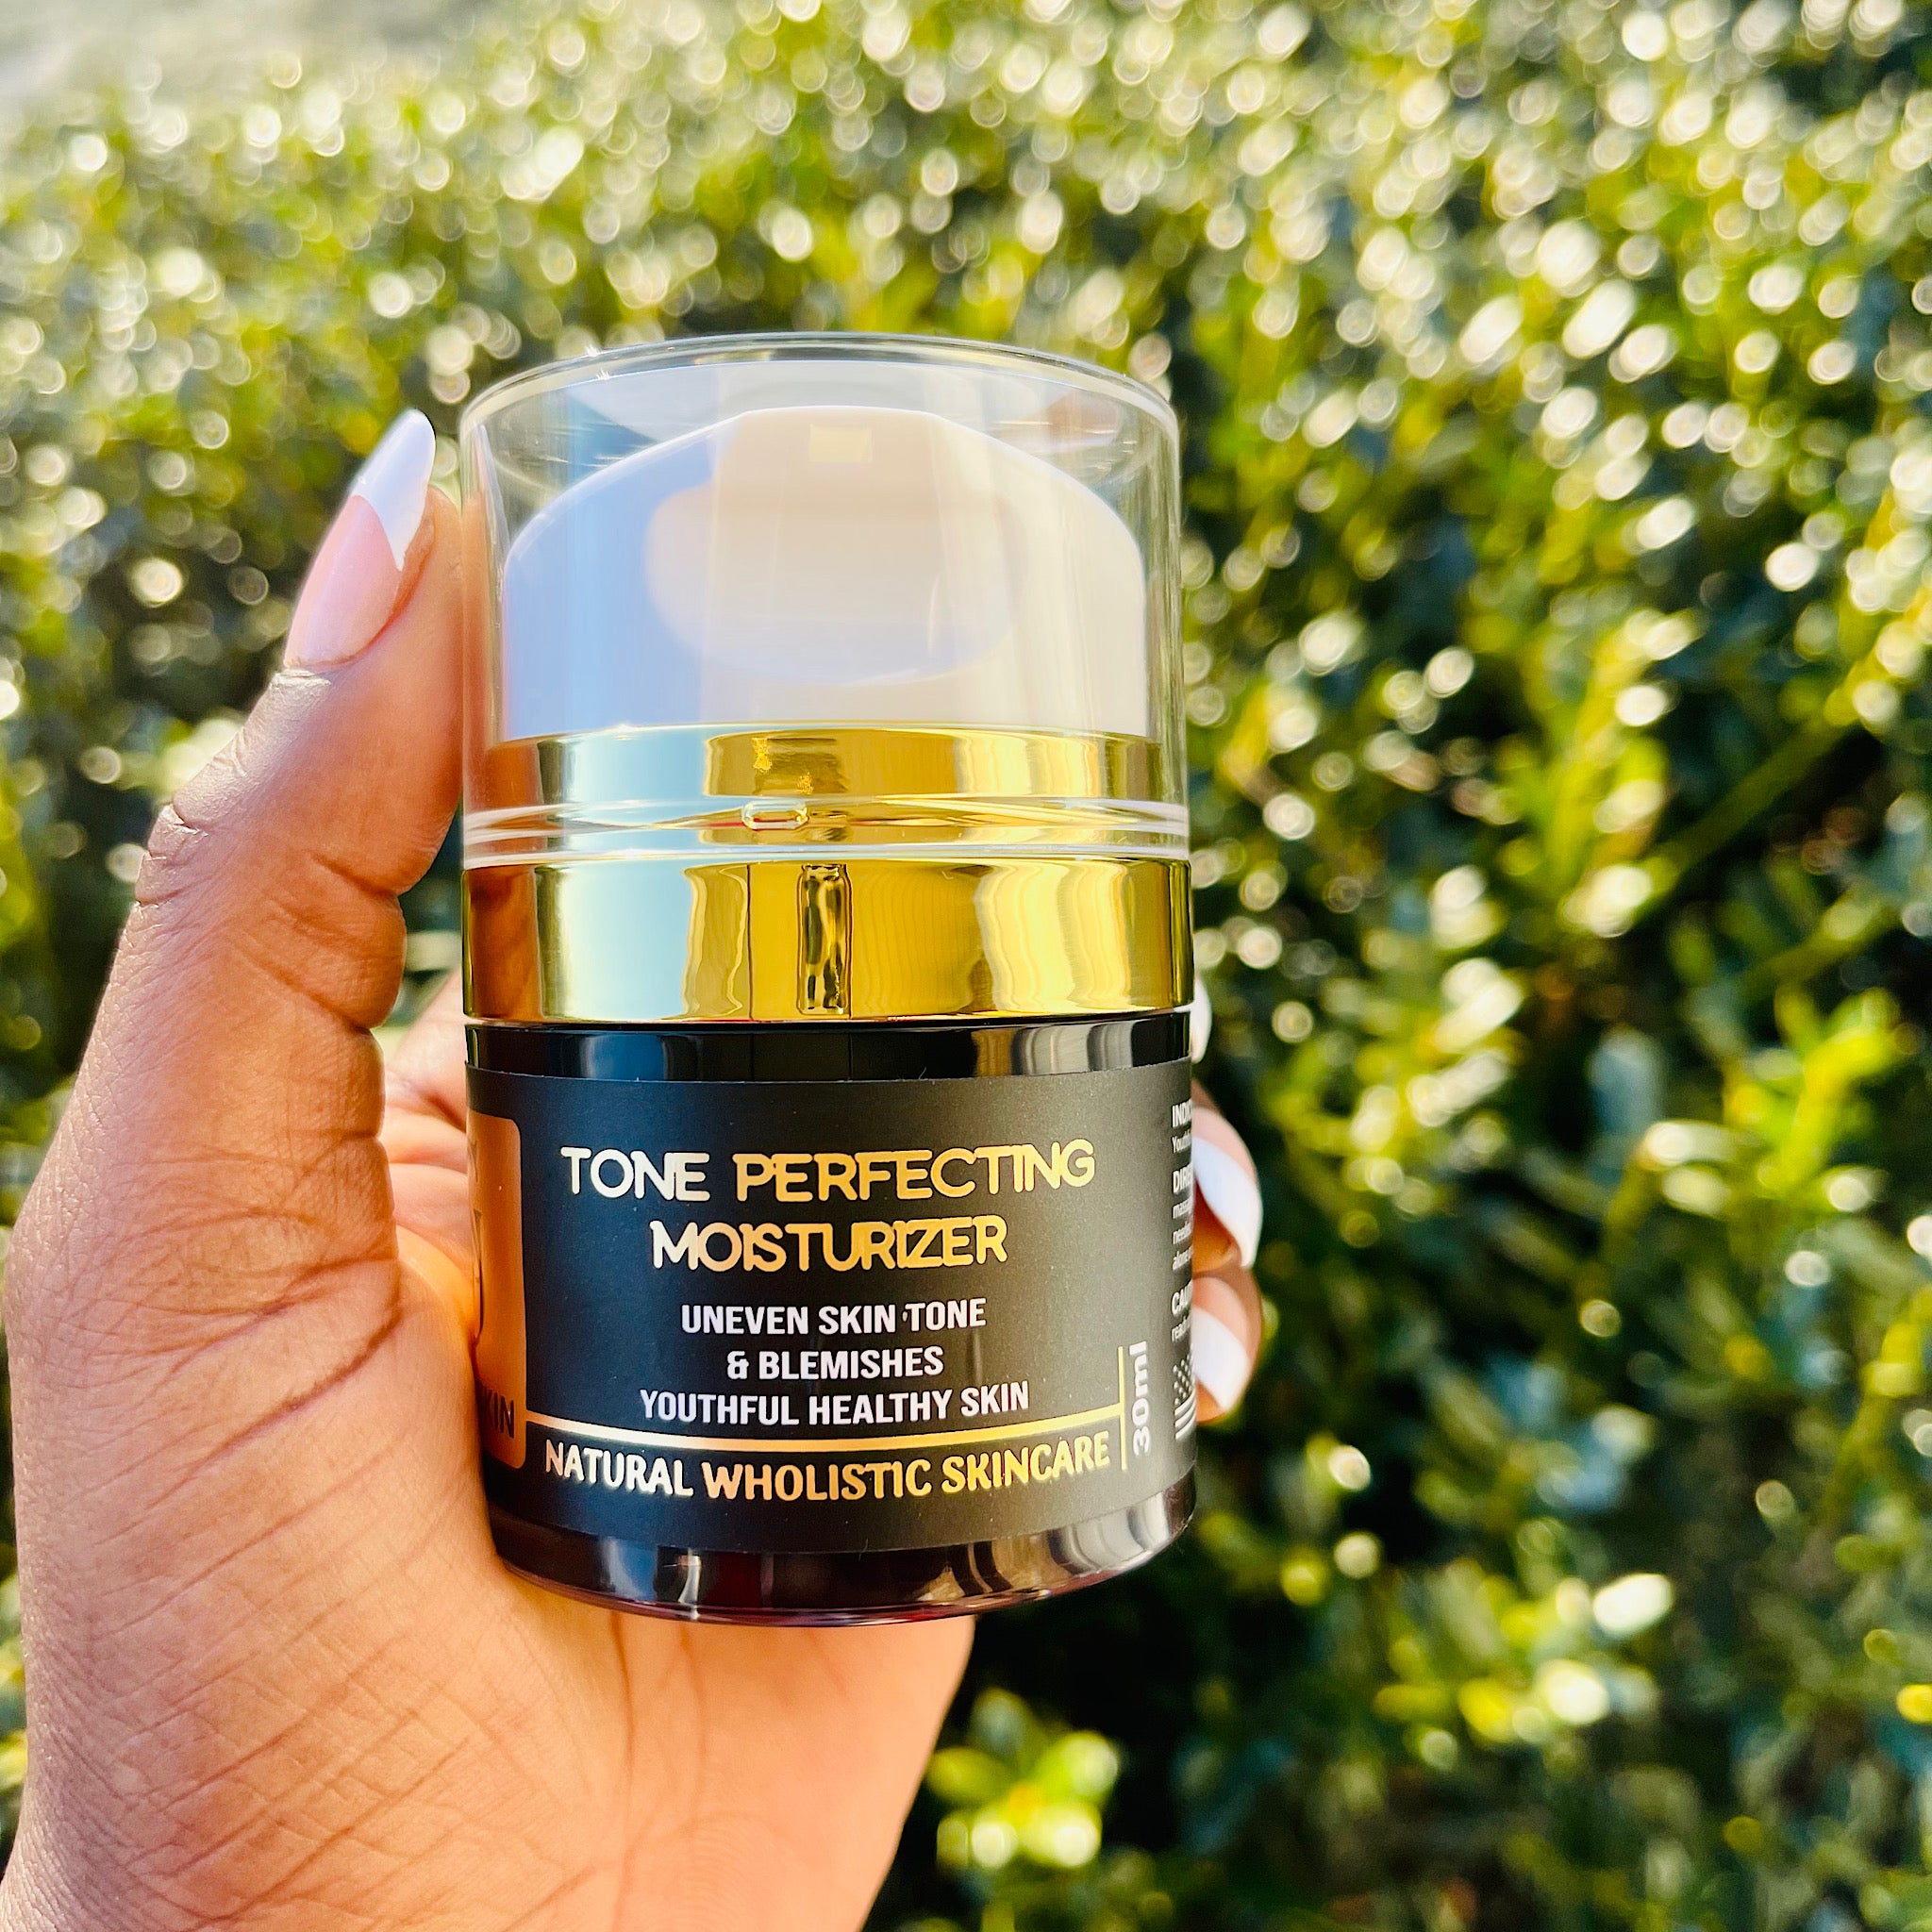 Tone Perfecting moisturizer